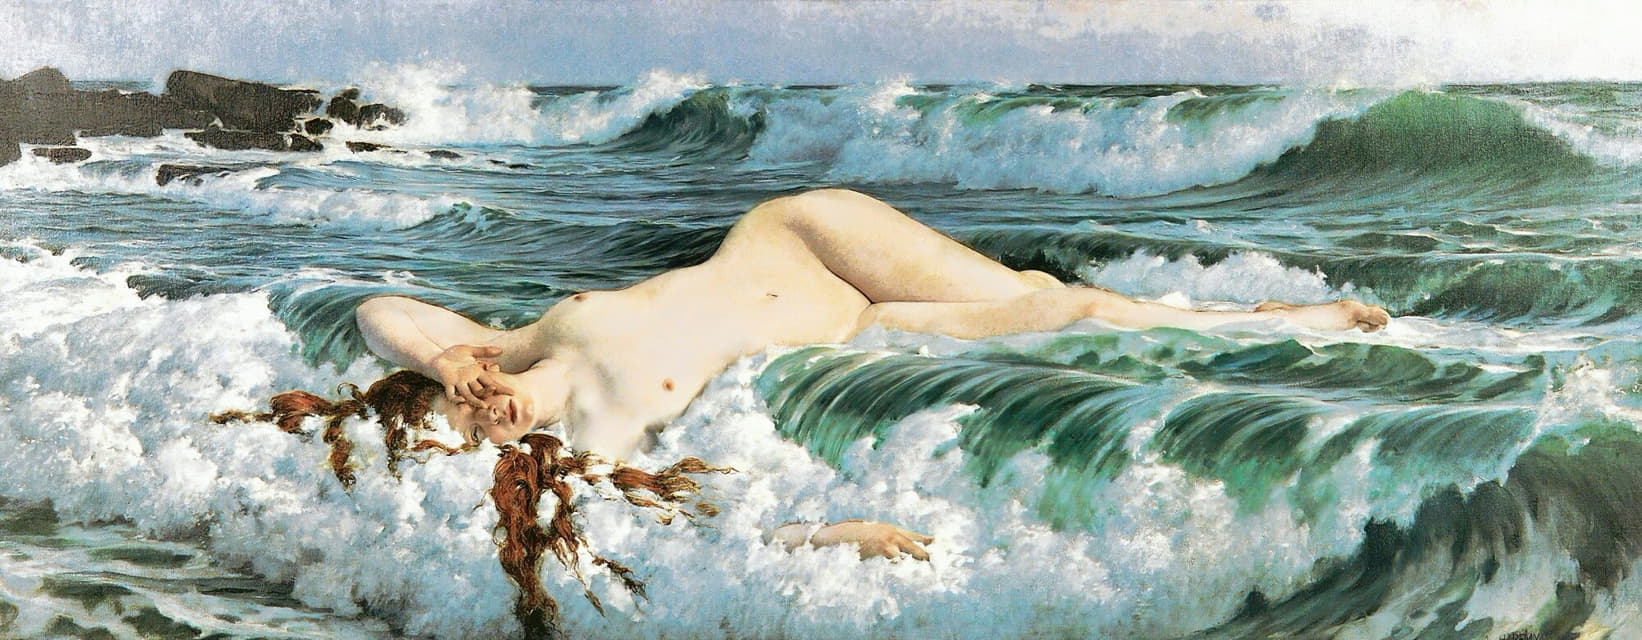 Adolf Hirémy-Hirschl - The birth of Venus